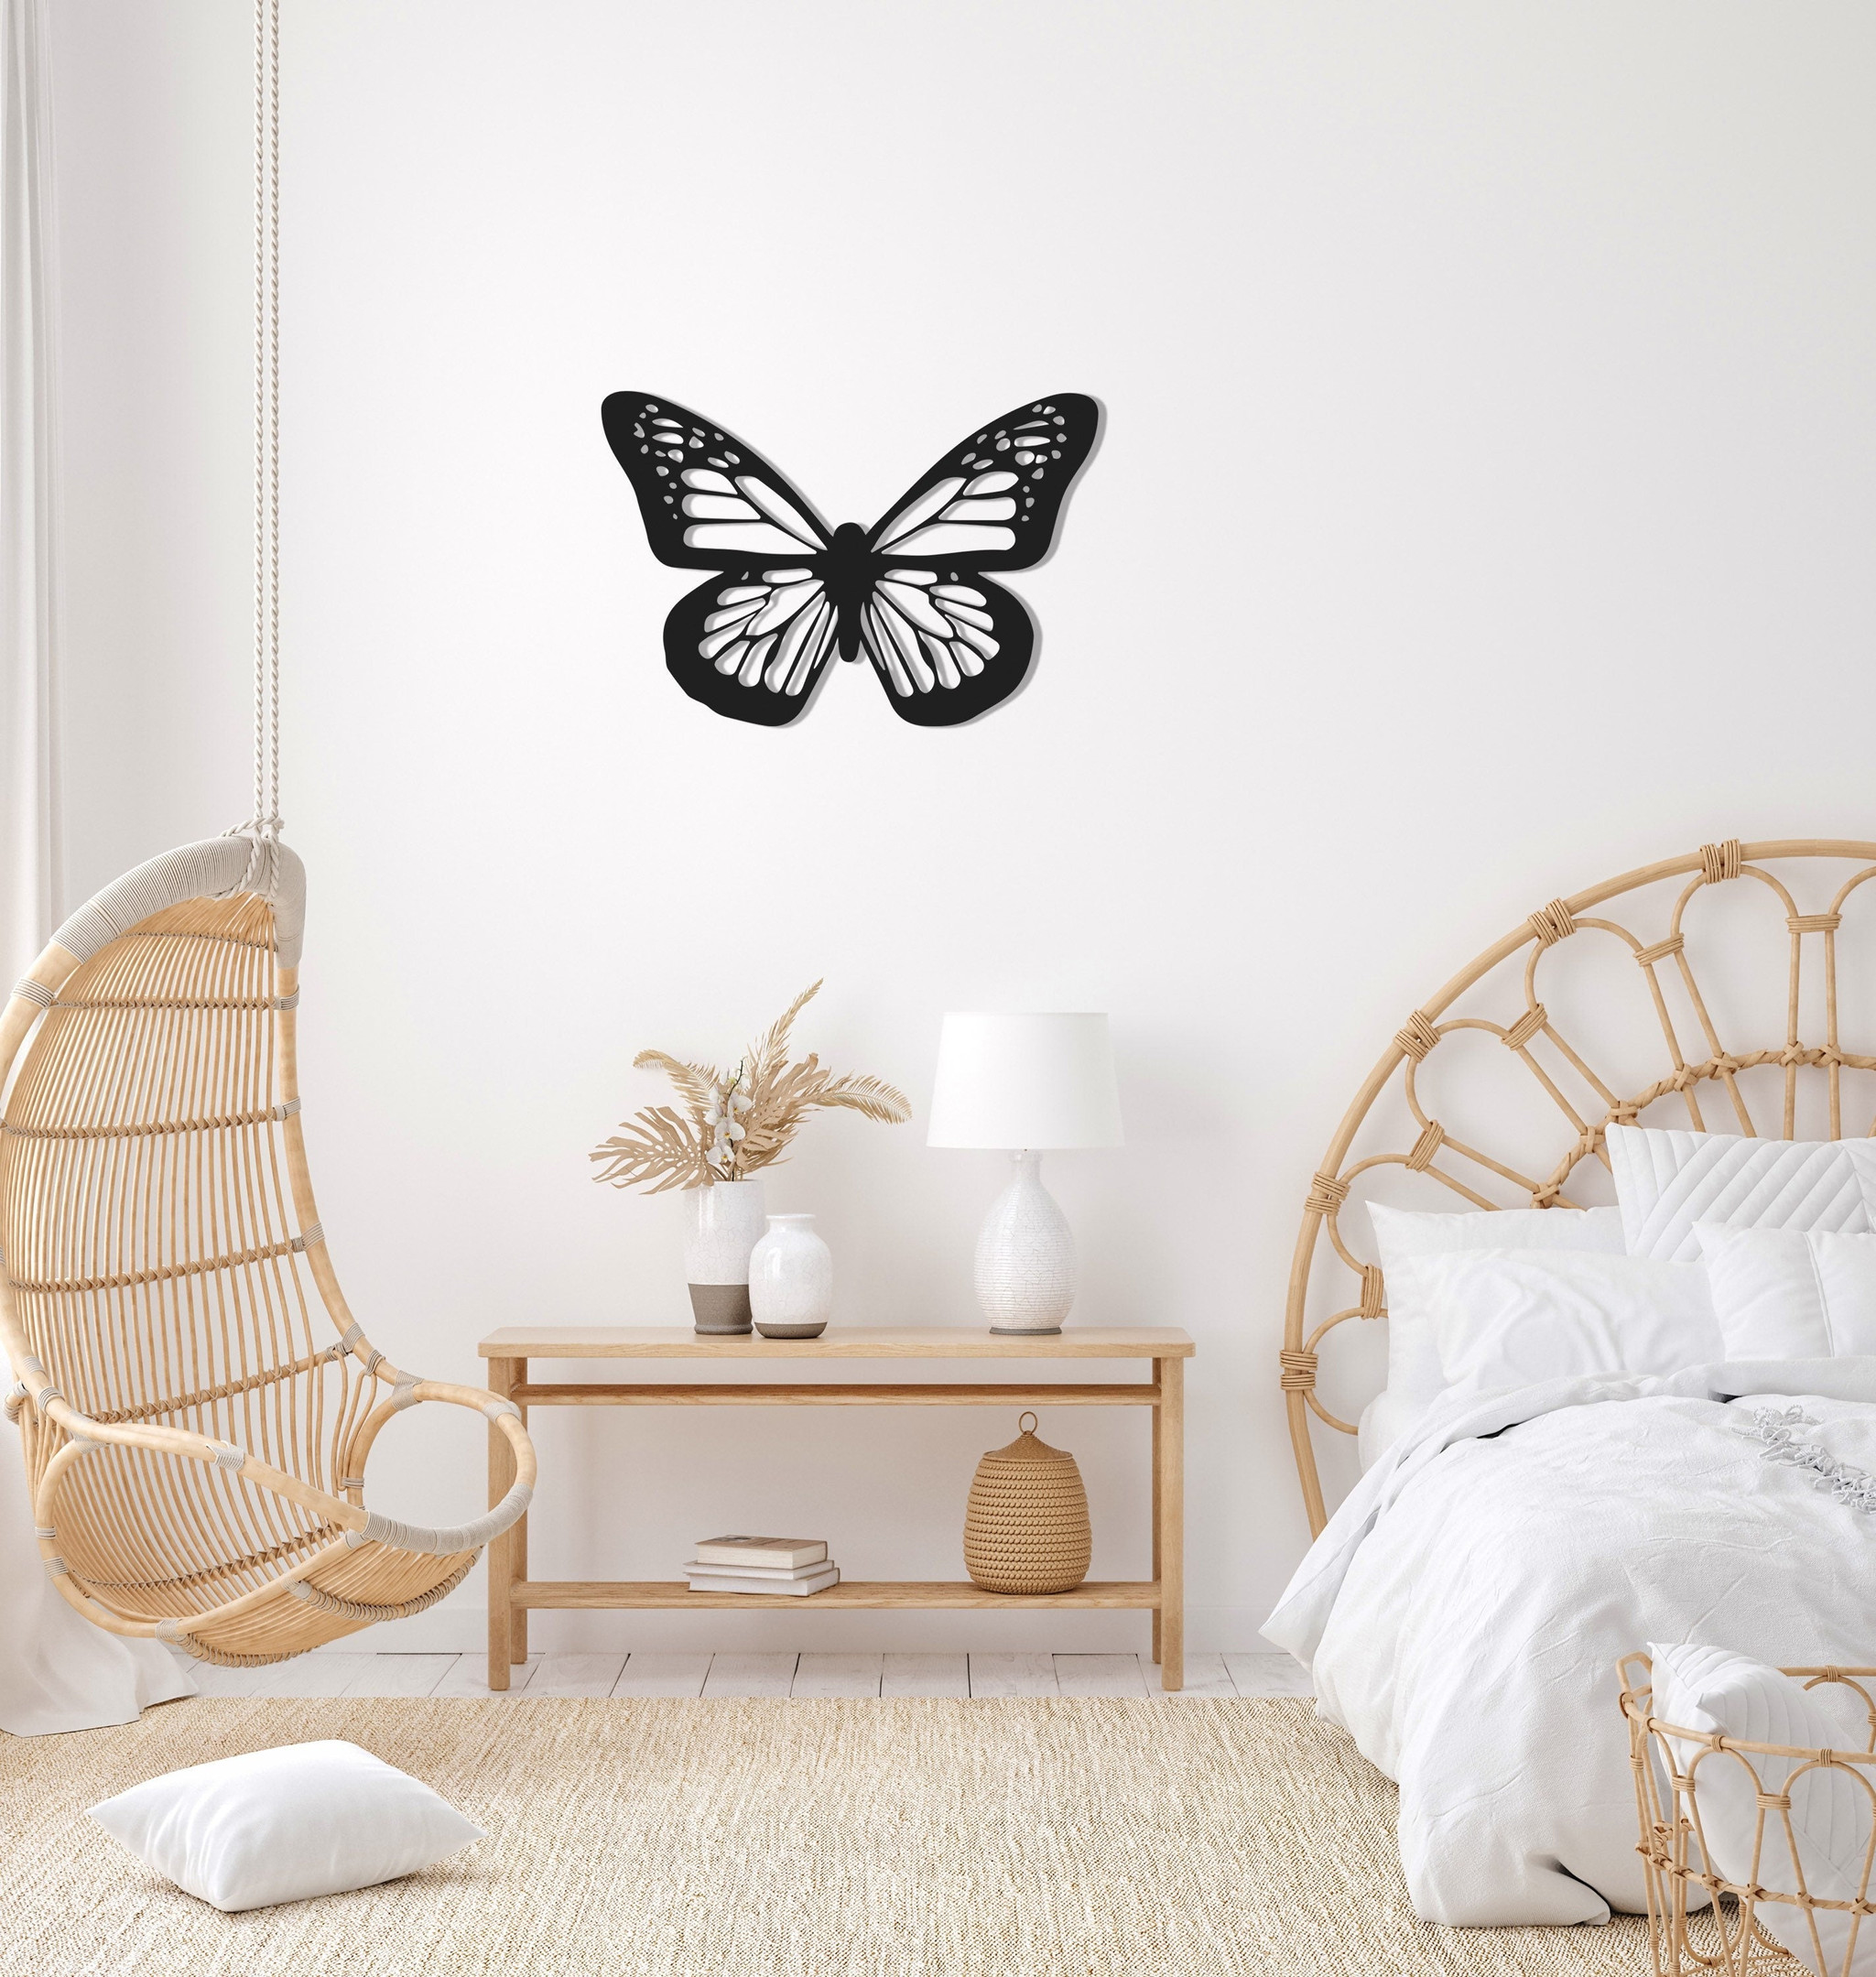 Butterfly Metal Wall Art, Butterfly Wings Wall Decor, Housewarming Gift, Office Wall Decor, Living Room Decor, Animal Art, Metal Laser Cut Metal Signs Custom Gift Ideas 24x24IN